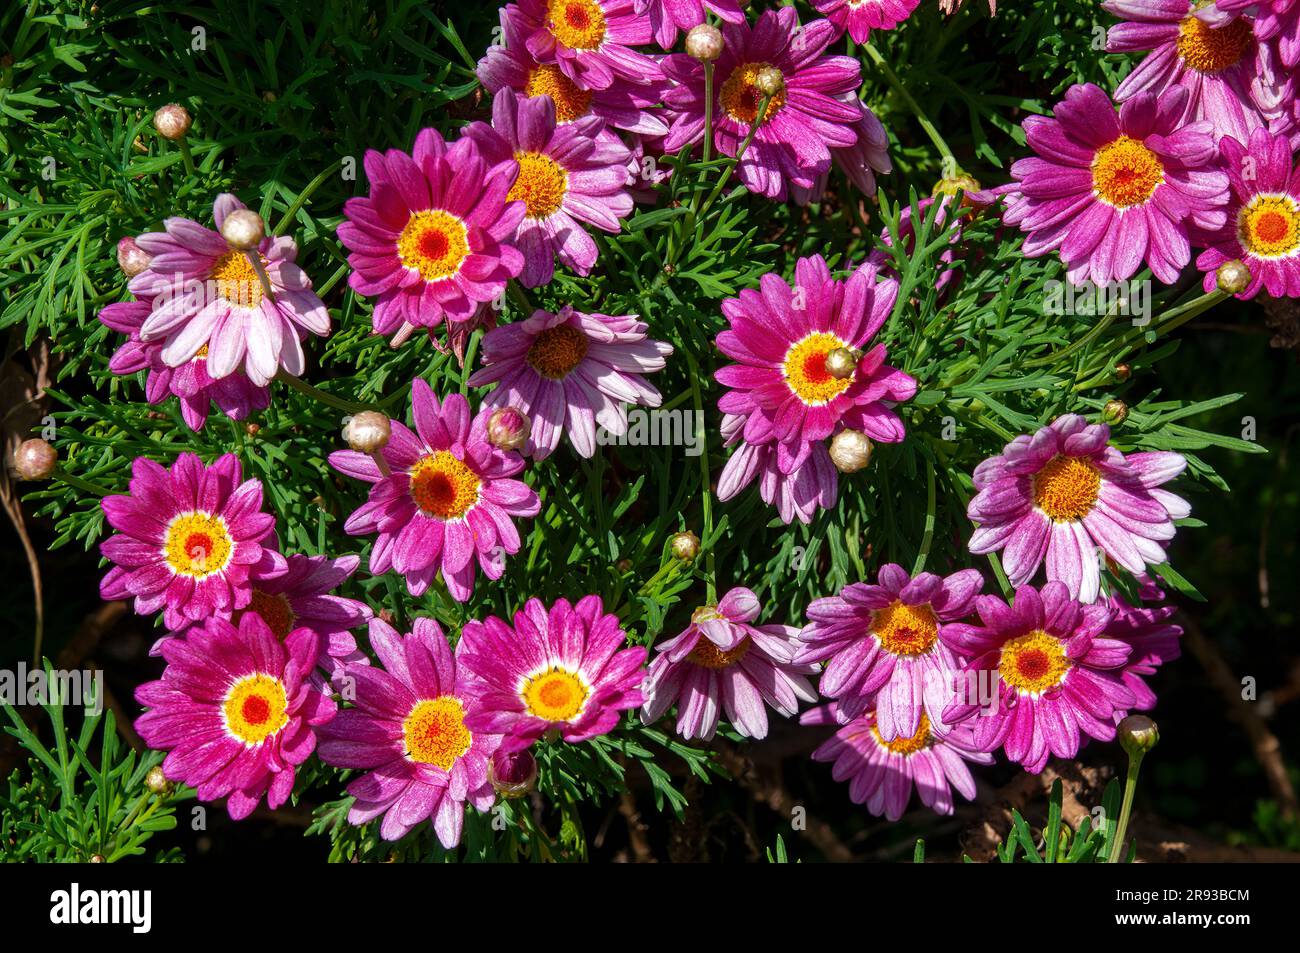 Sydney Australia, bright flowers of argyranthemum frutescens also known as Paris daisy or marguerite daisy Stock Photo